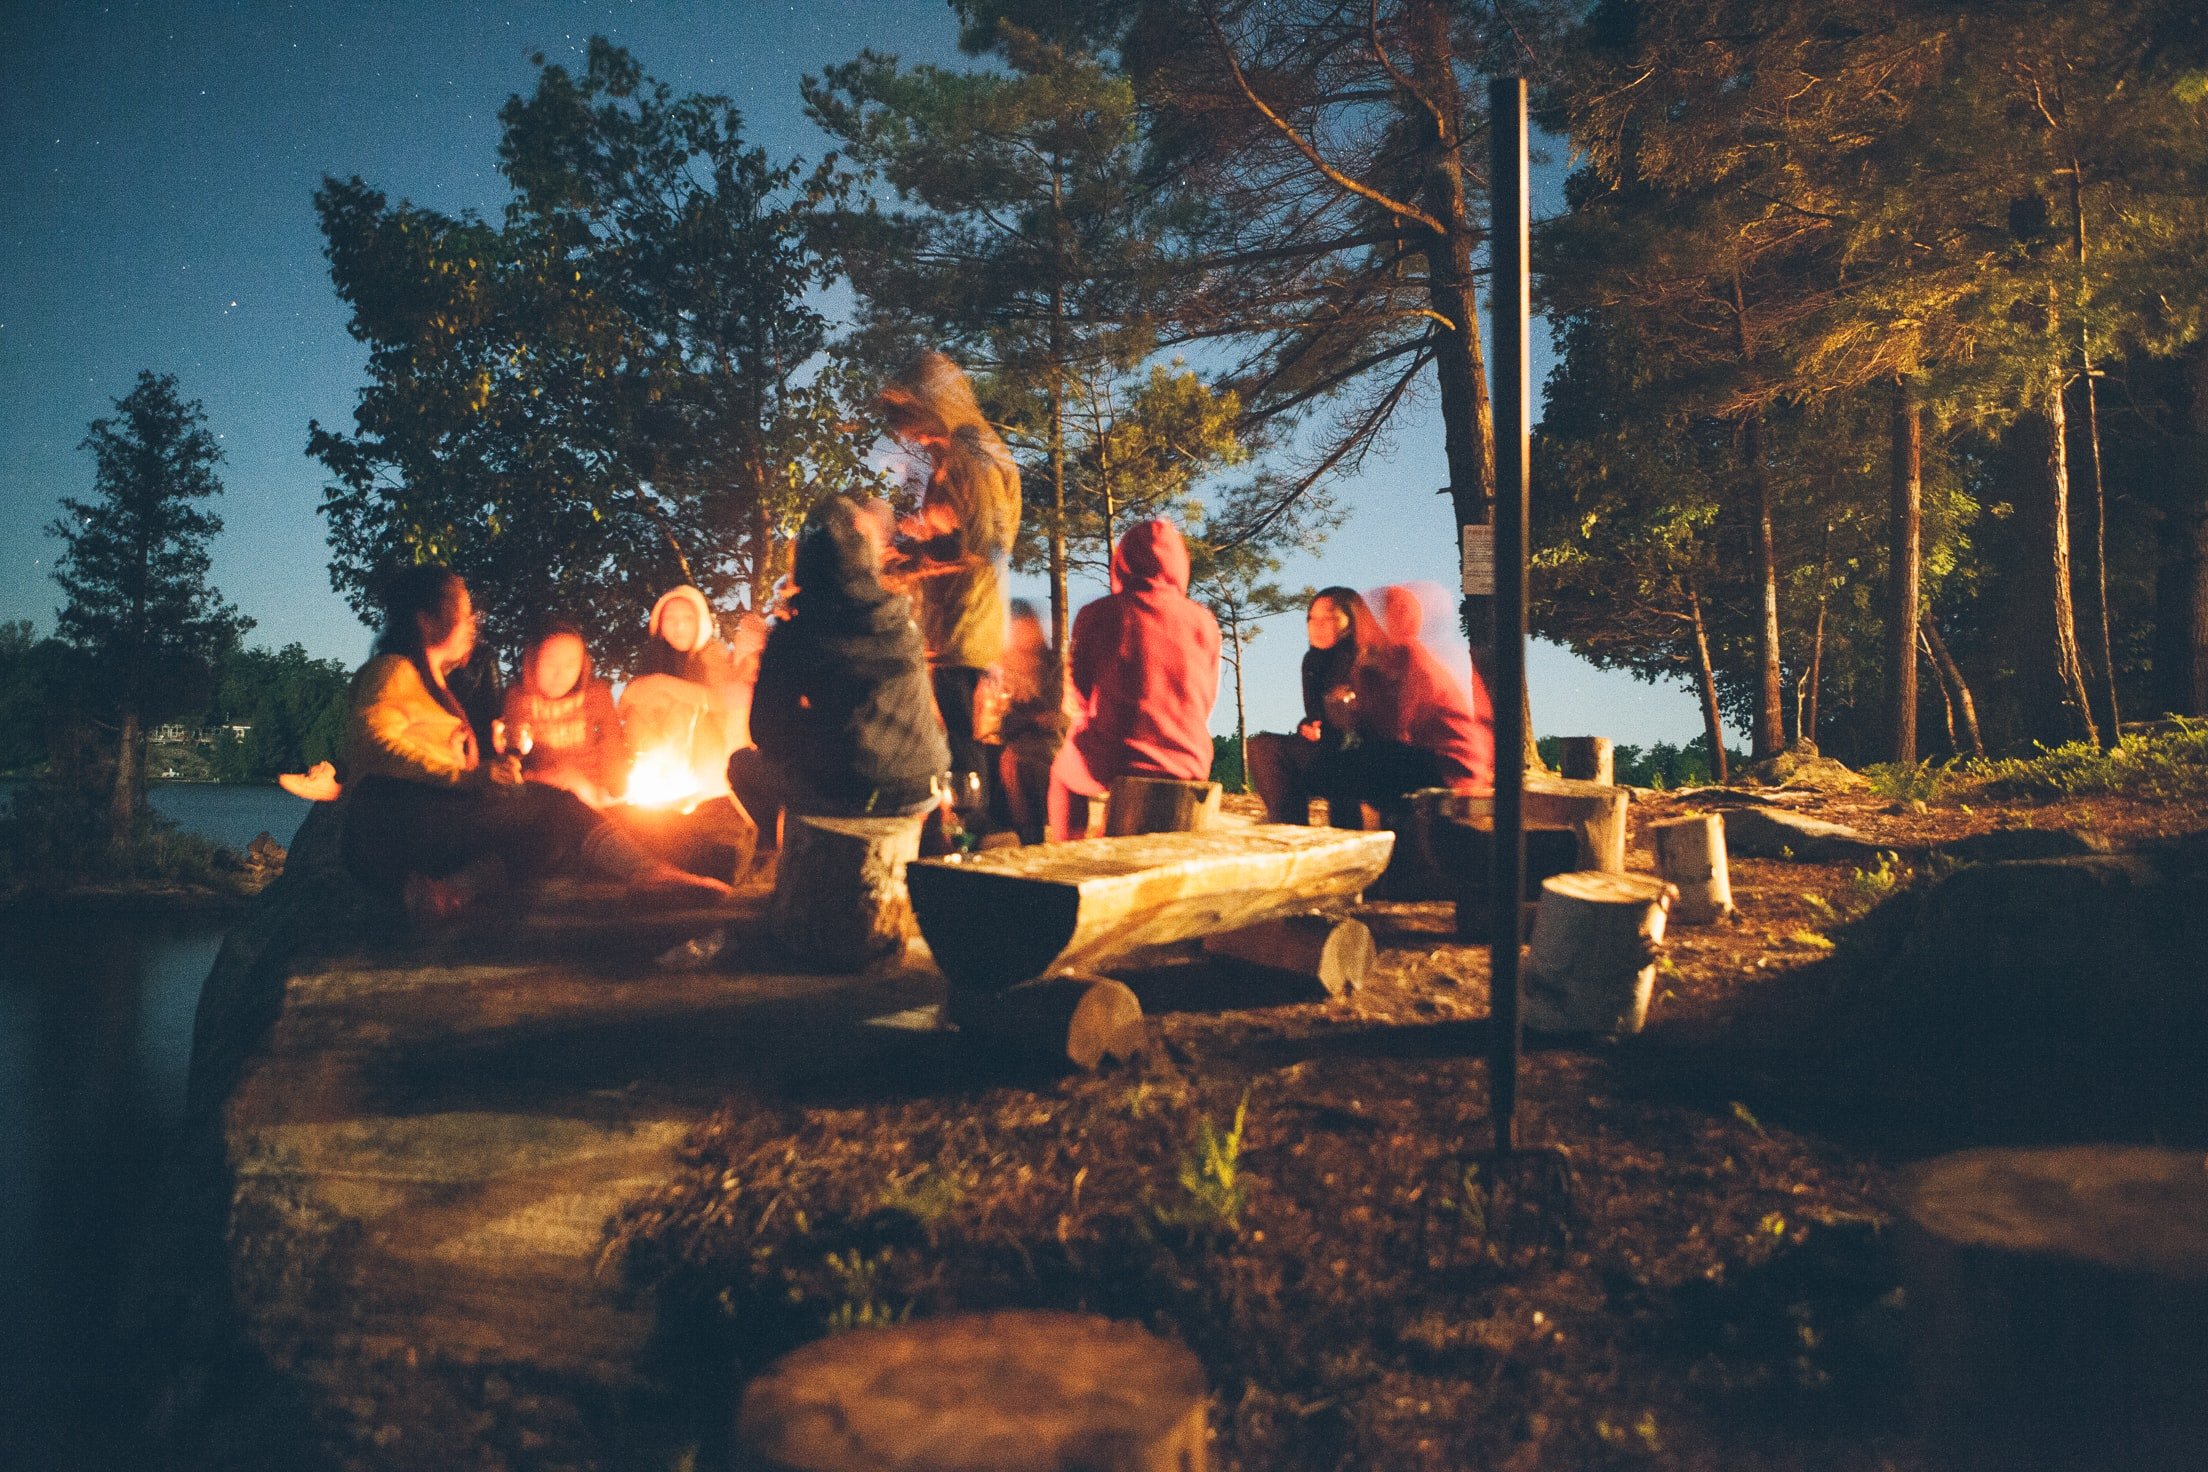 Group of people near bonfire | Source: Unsplash